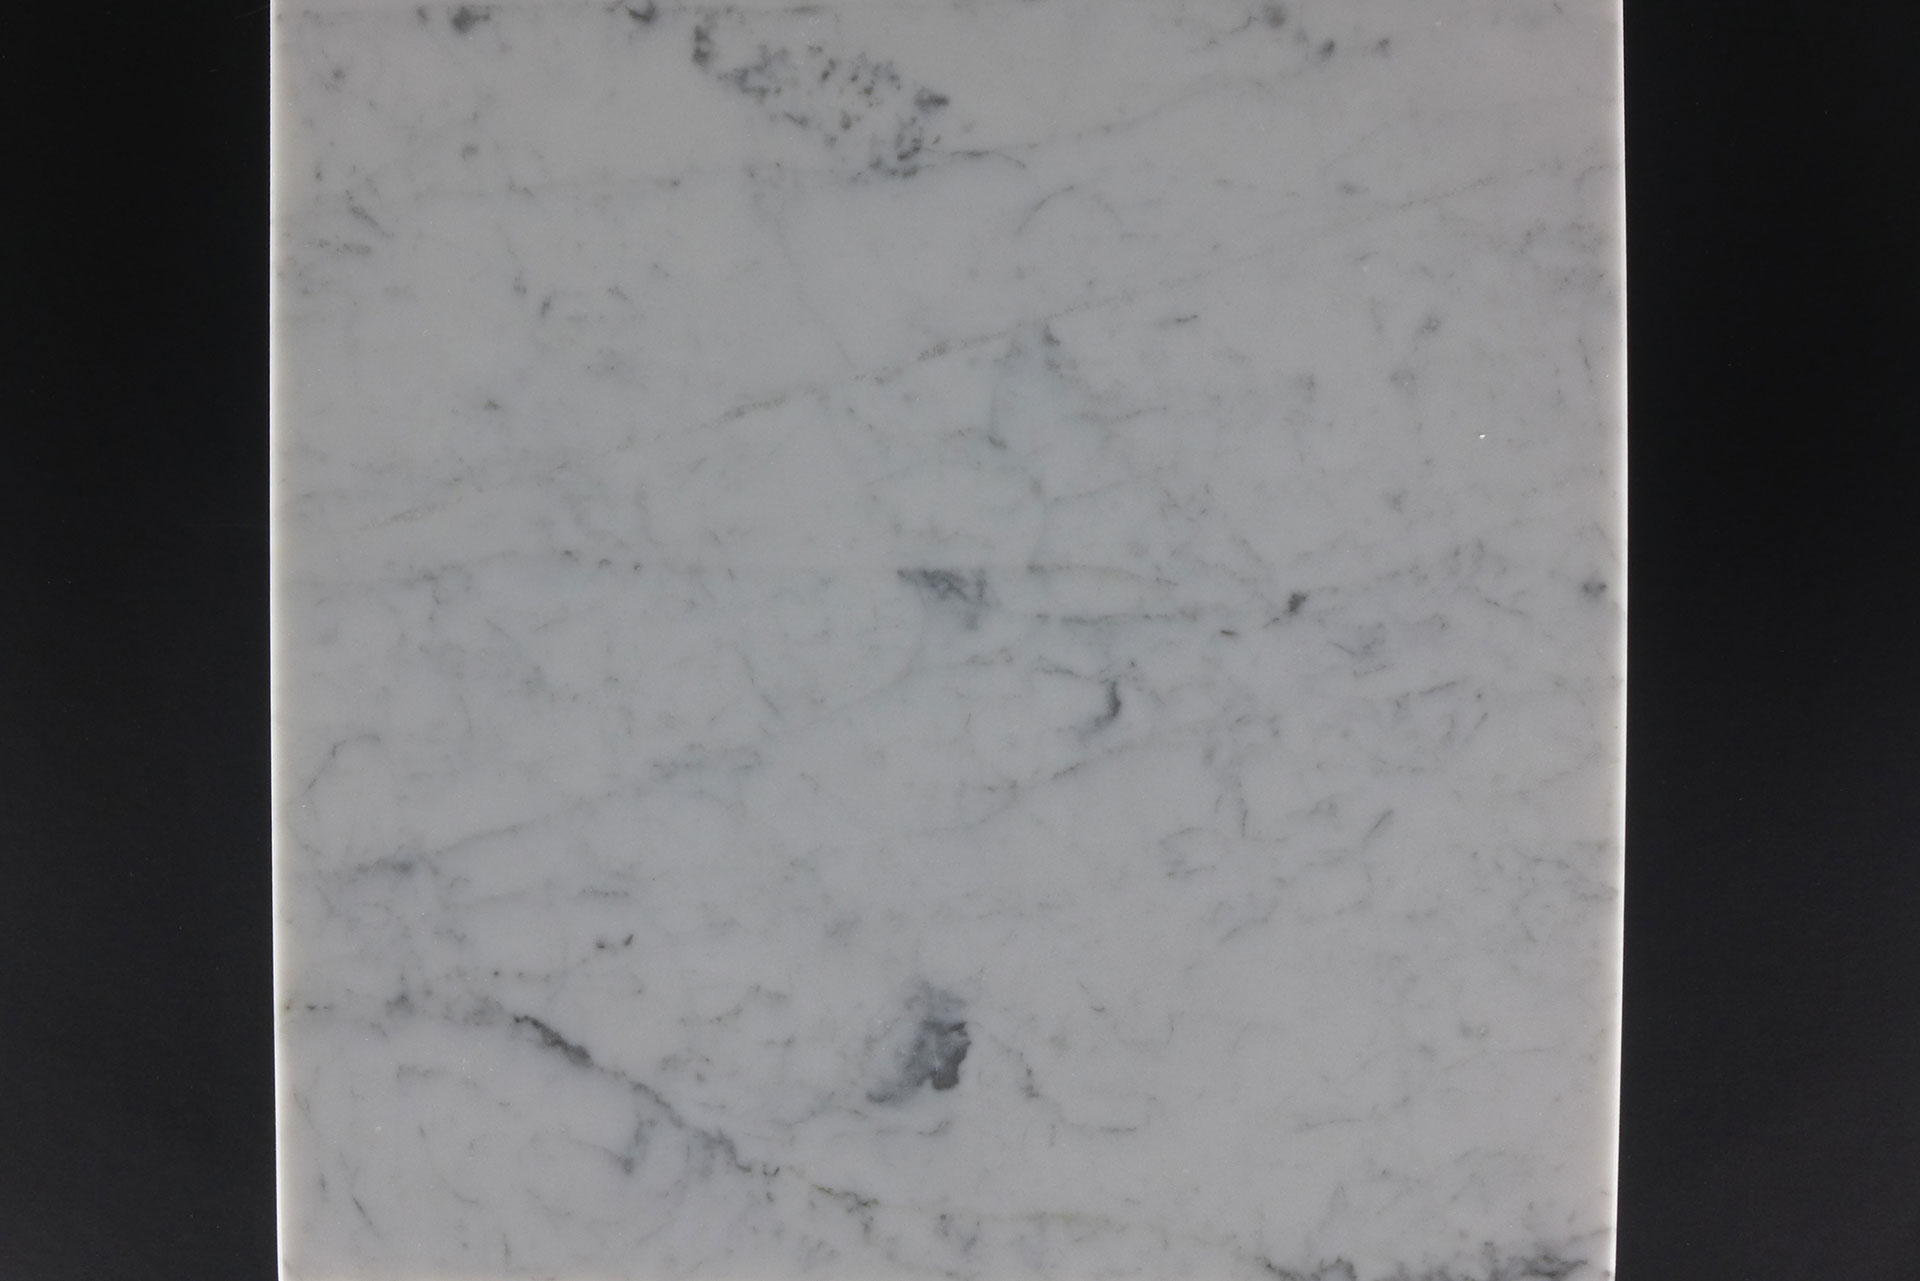 Carrara white